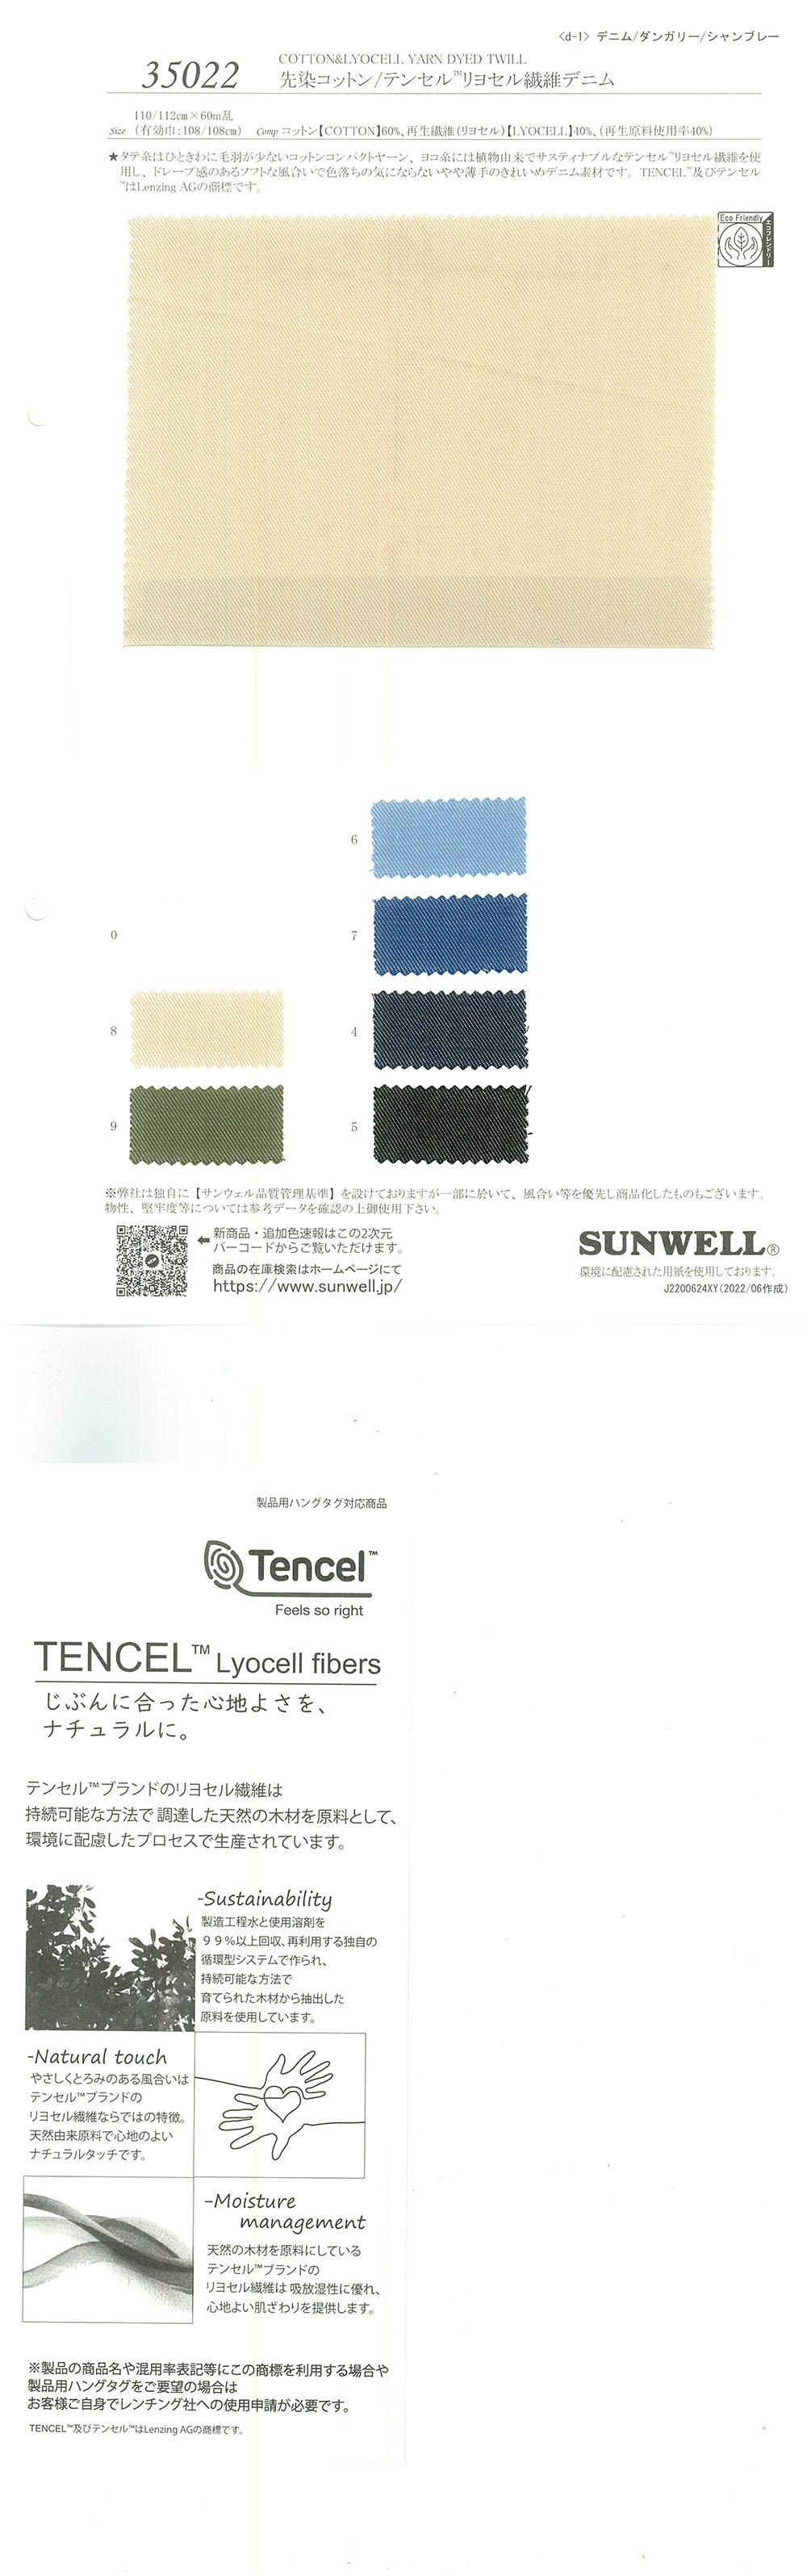 35022 Garngefärbte Baumwolle / Tencel (TM) Lyocell-Faser-Denim[Textilgewebe] SUNWELL